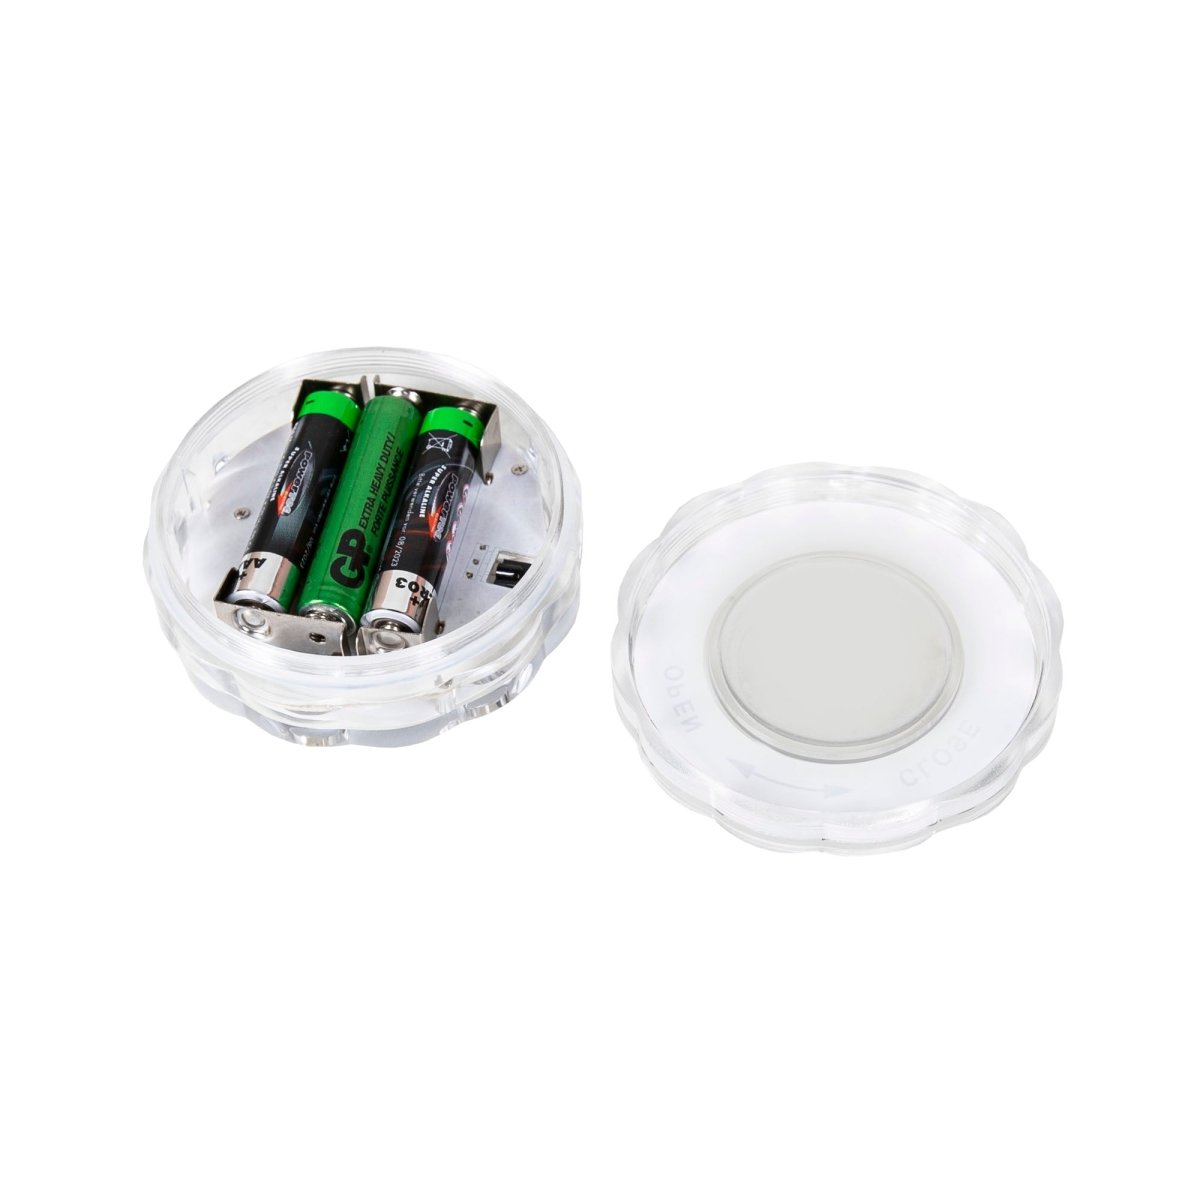 LED-lys (Lille) - Amy Shop - Lille batteridrevent LED-lys med fjernbetjening og flere lysindstillinger